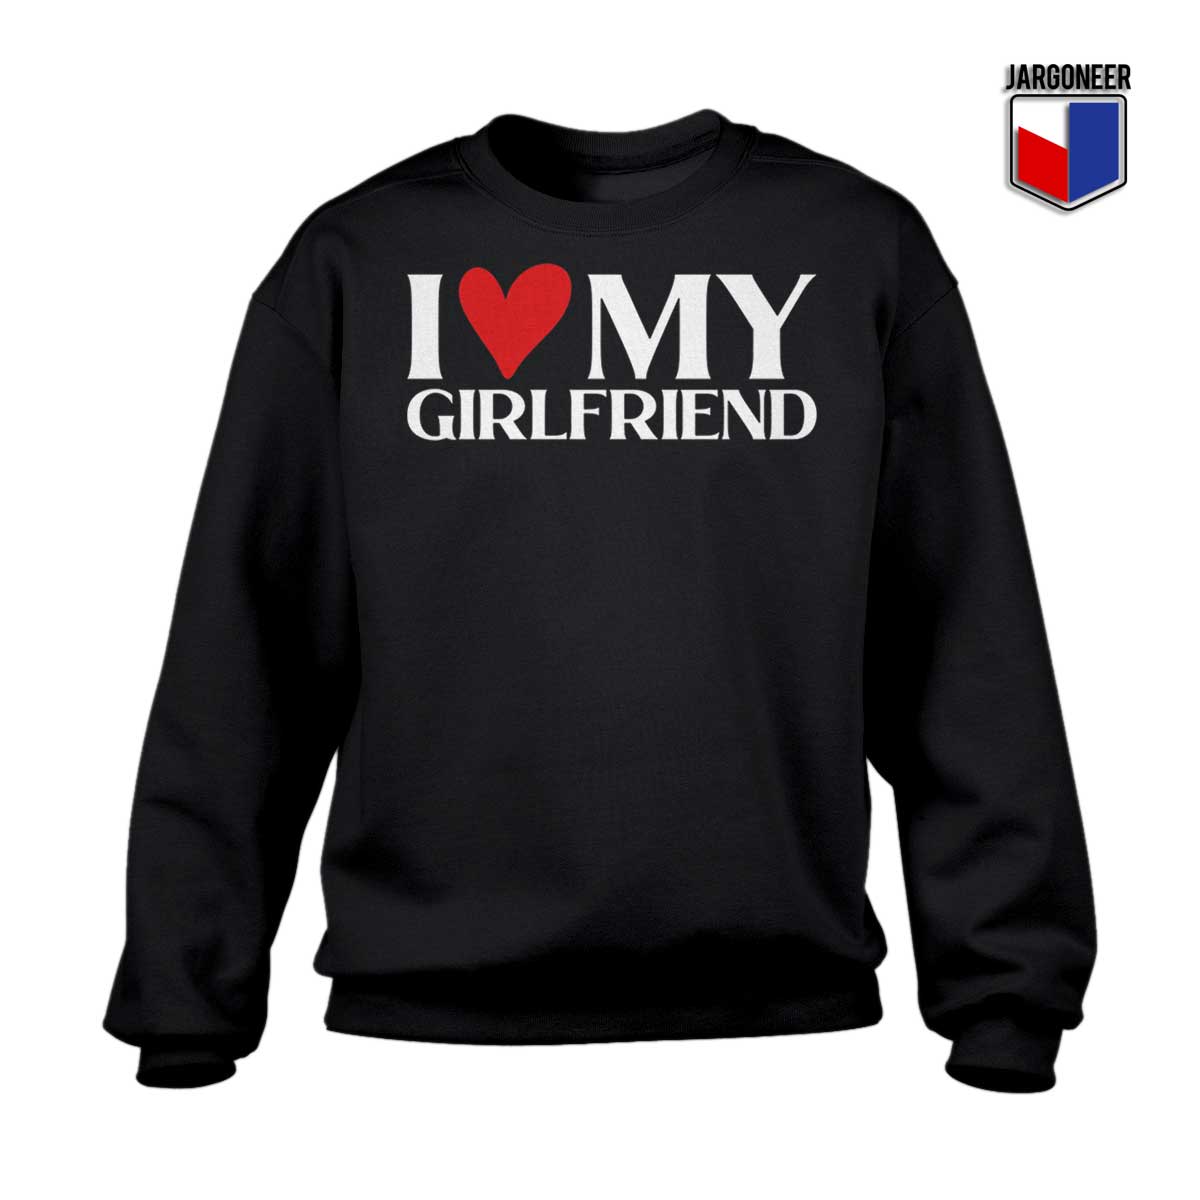 I Love My Girlfriend Sweatshirt - Shop Unique Graphic Cool Shirt Designs